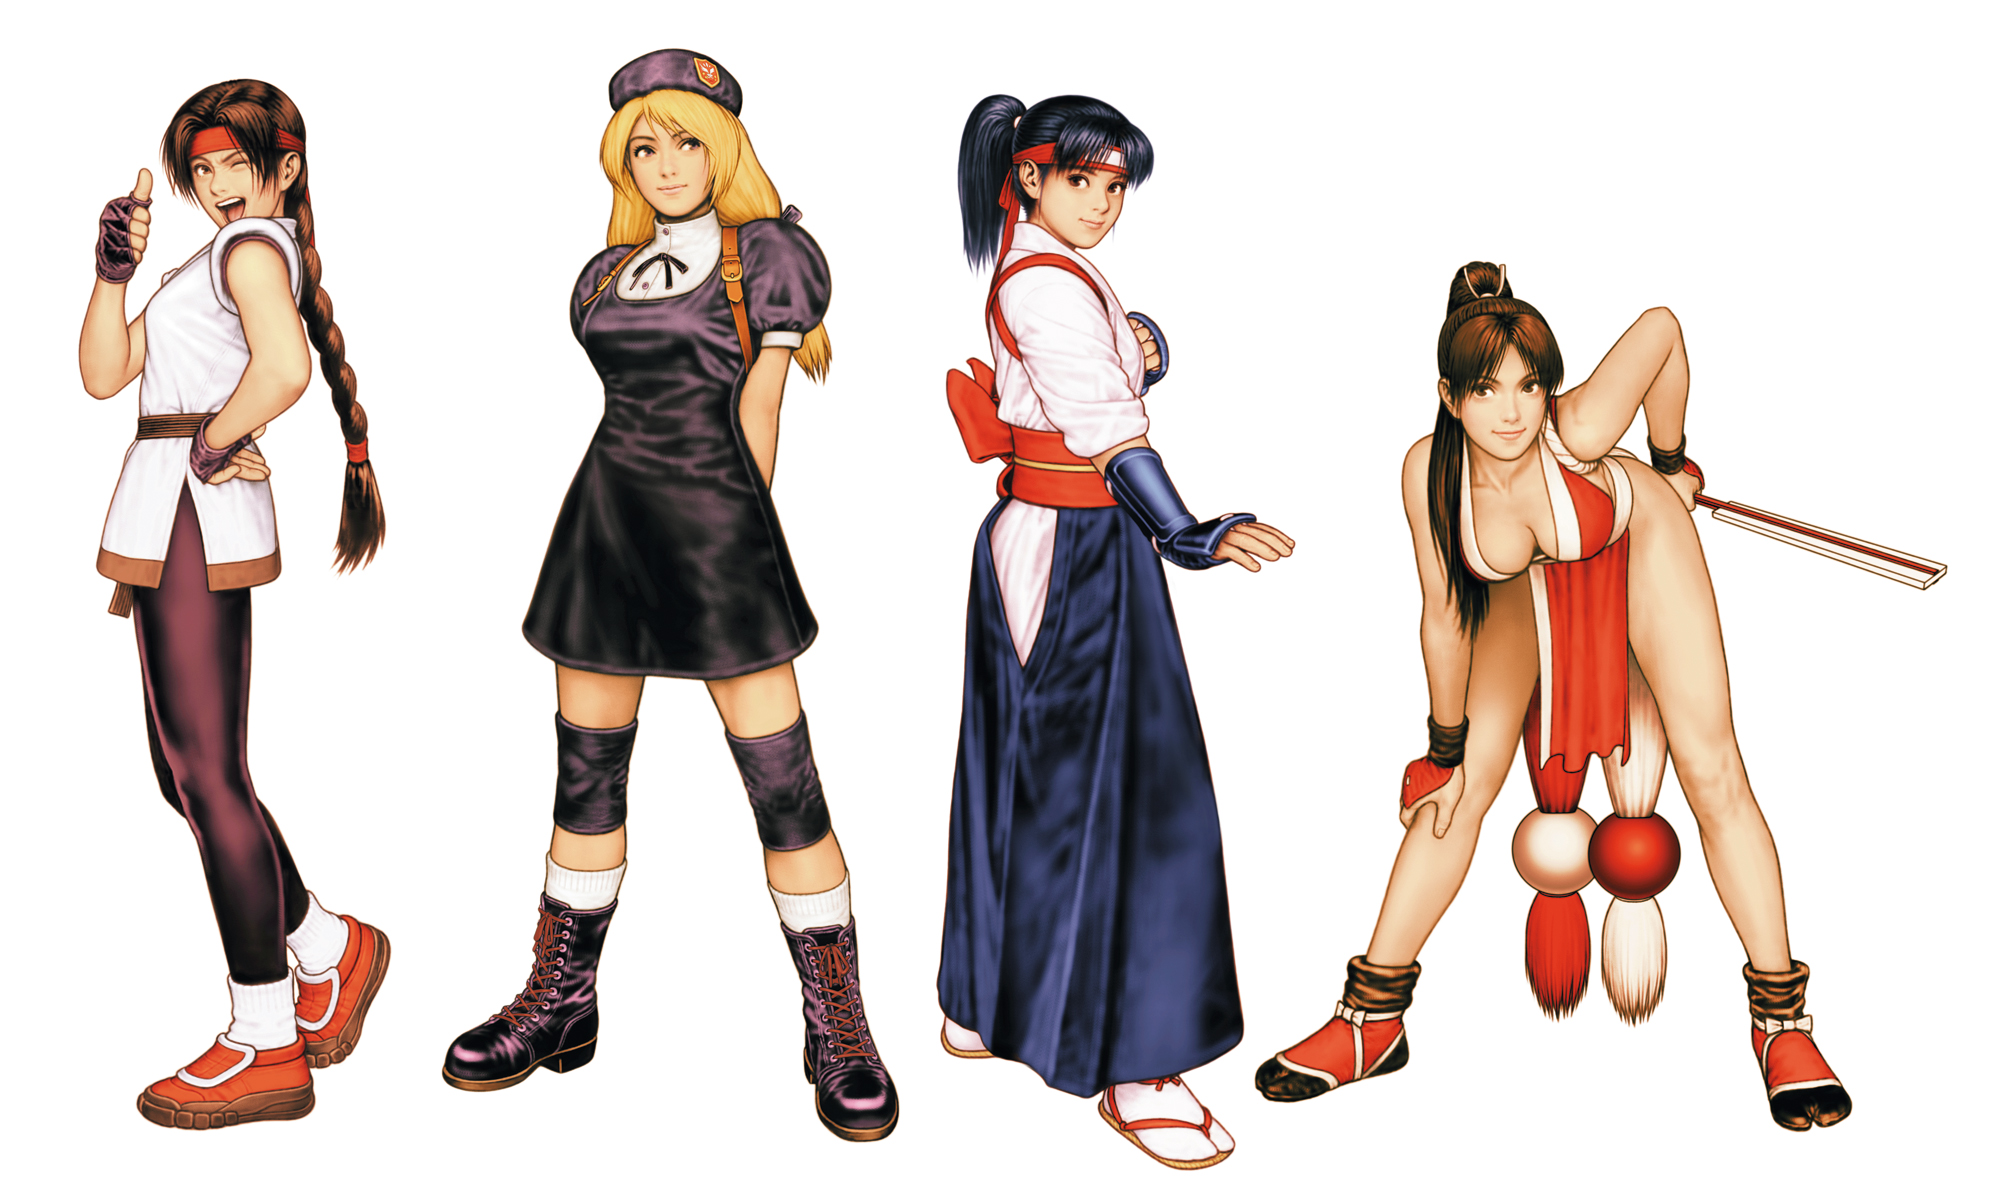 Team Women Fighters, SNK Wiki